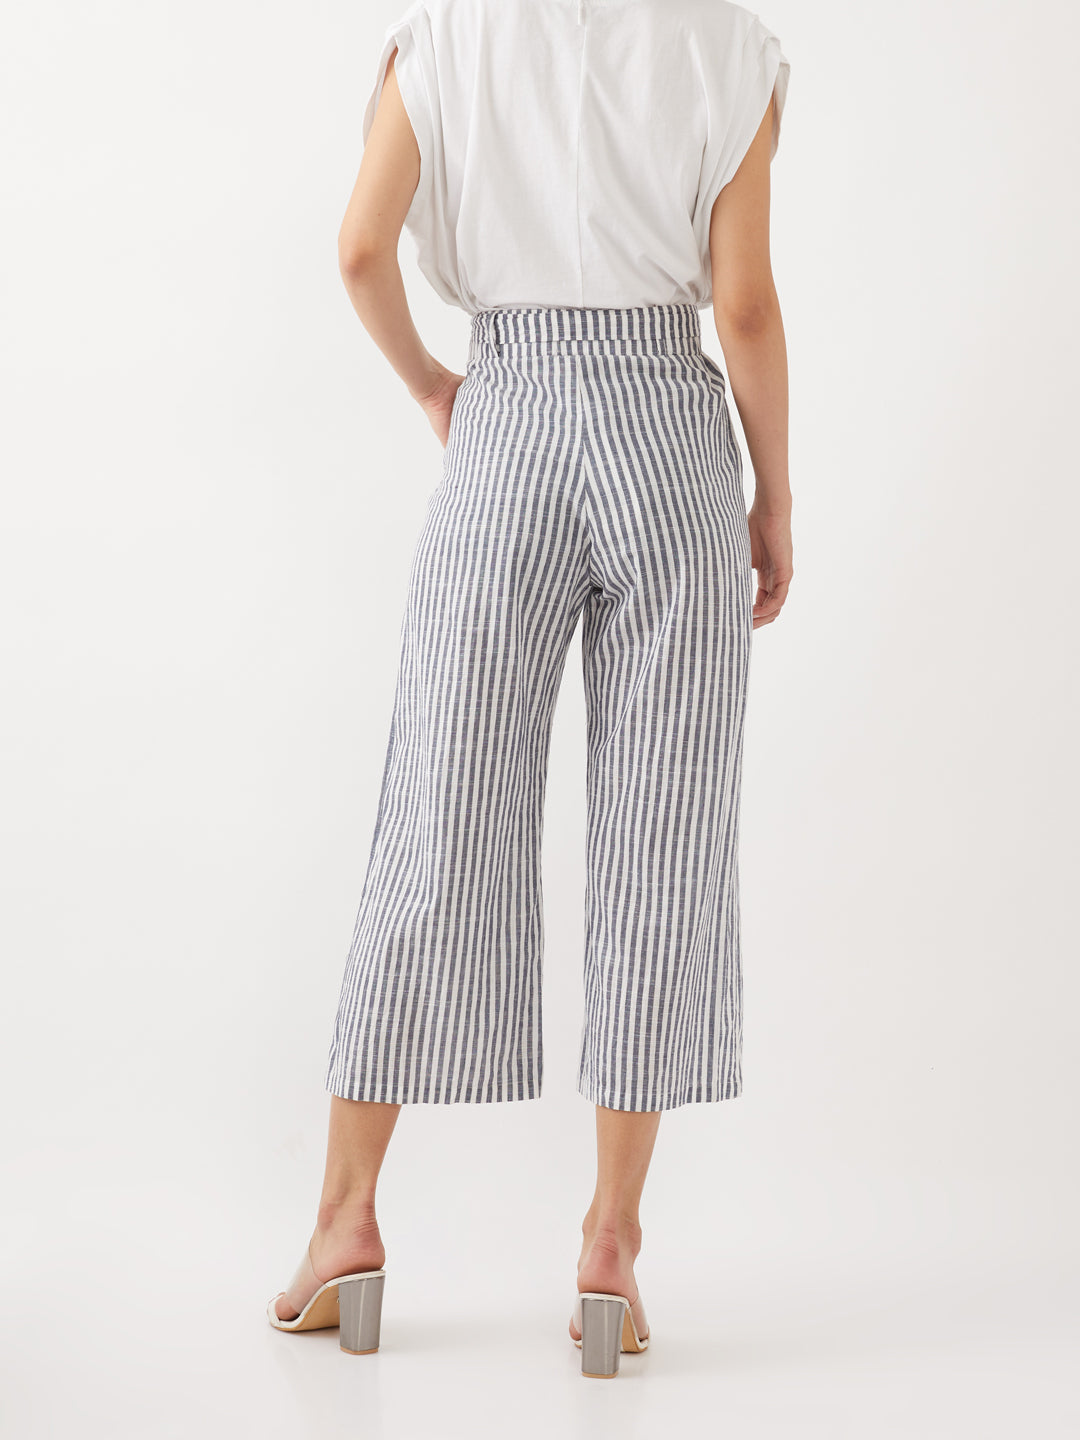 Buy White Striped Trousers For Women Online  Zink London